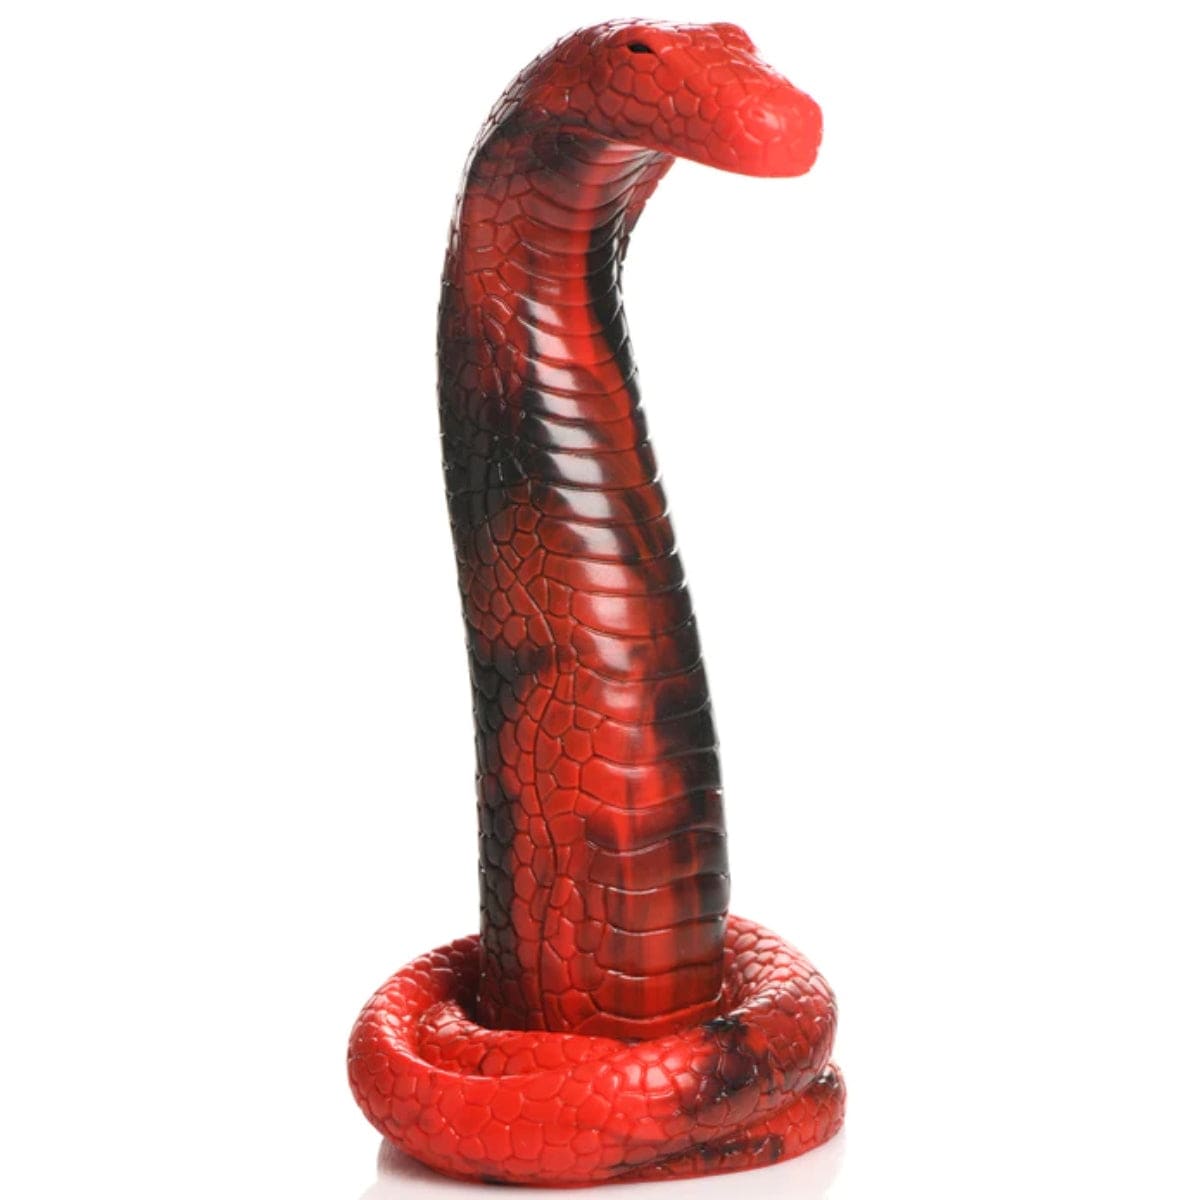 Creature Cocks - King Cobra Silicone Dildo | 10 inches creature cocks - For Me To Love